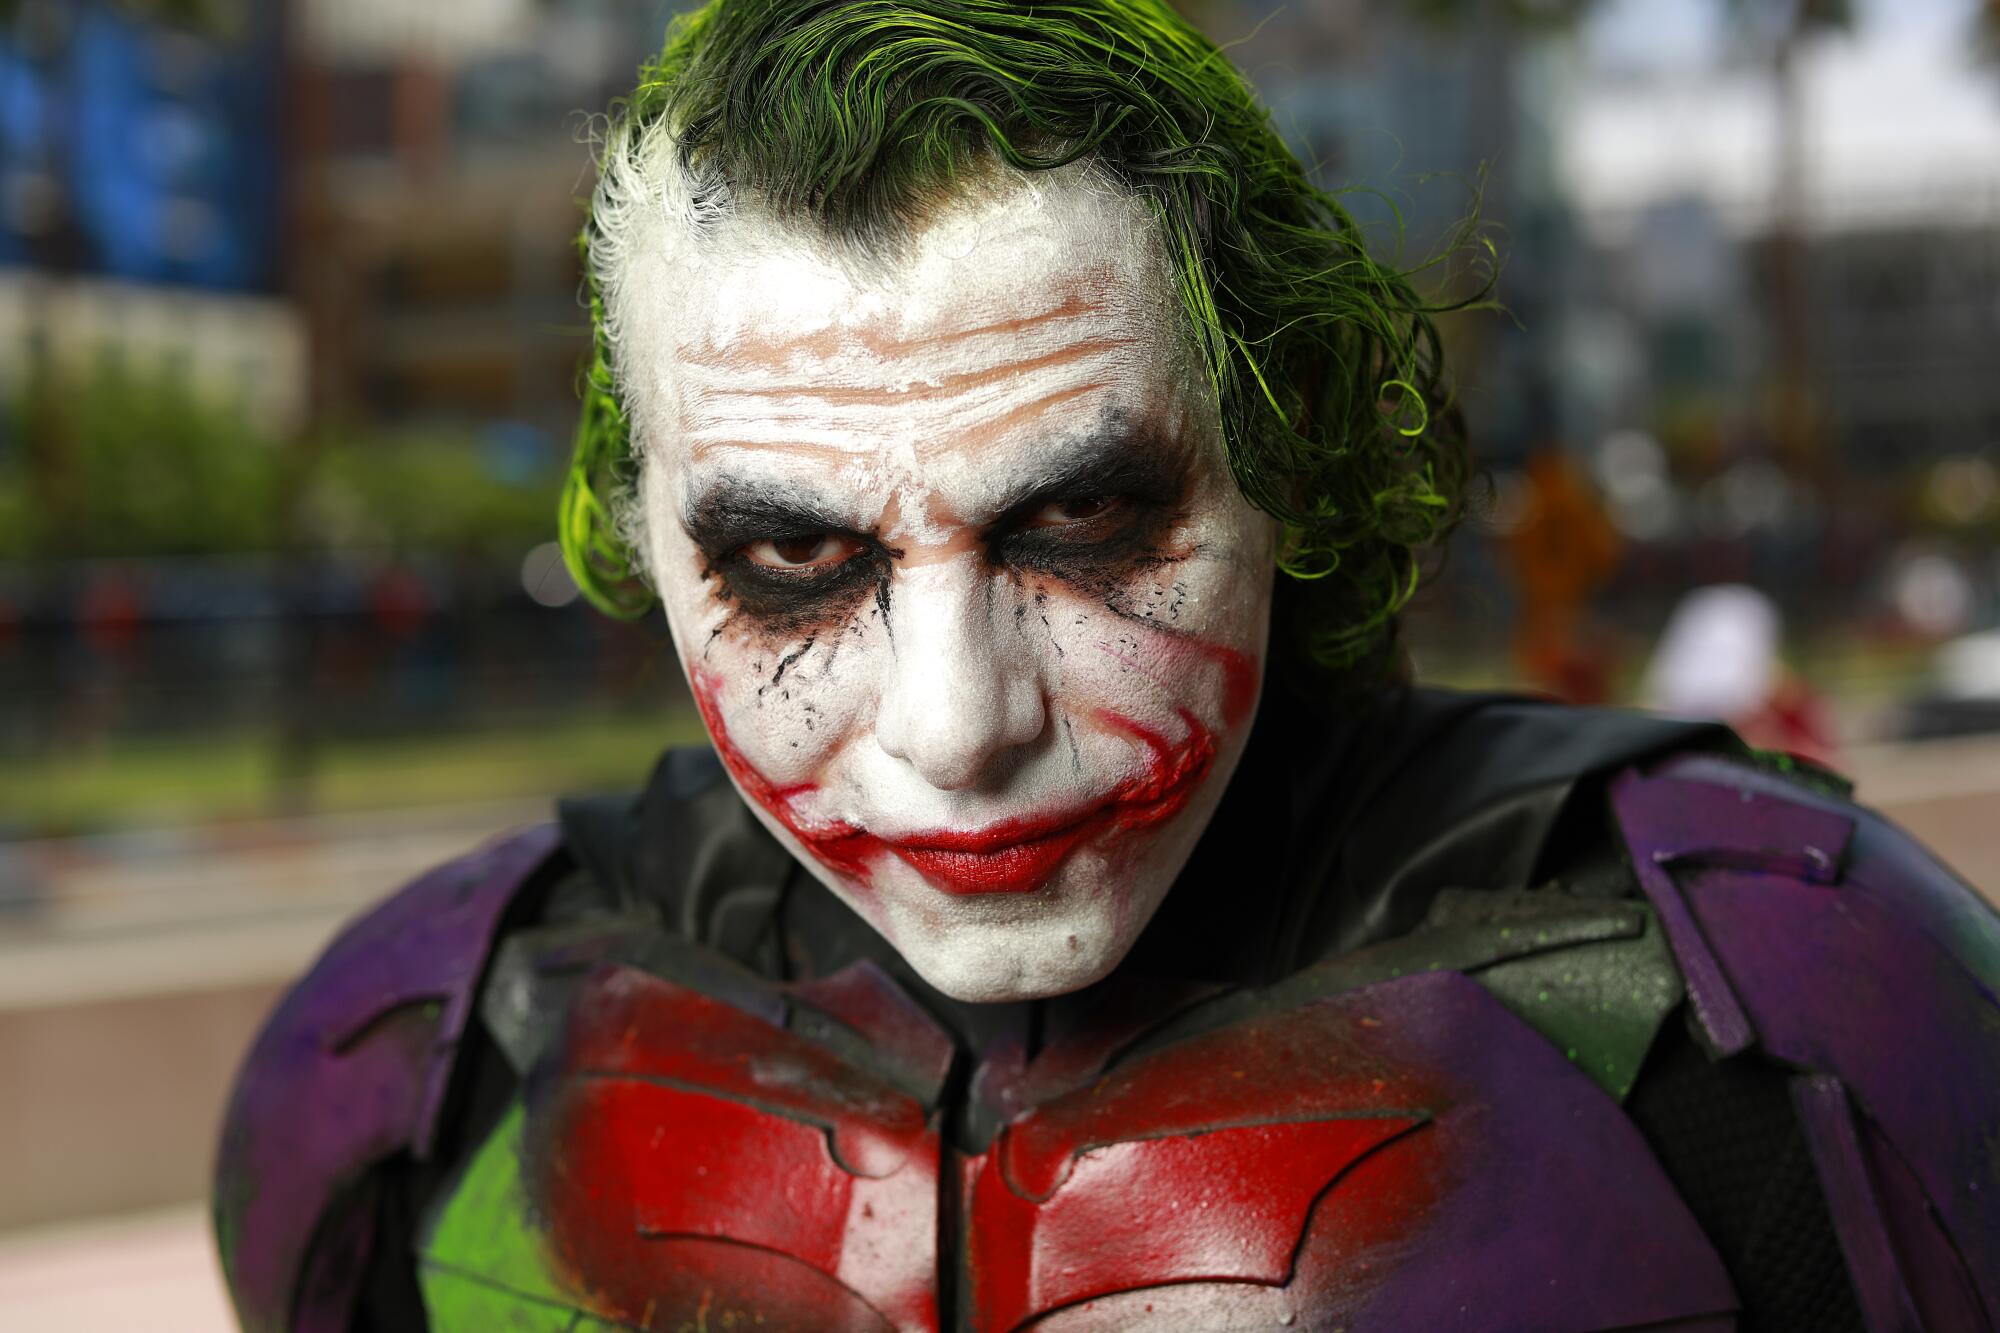 Jean Markus of Sao Paulo Brazil dressed as the Joker at Comic-Con.